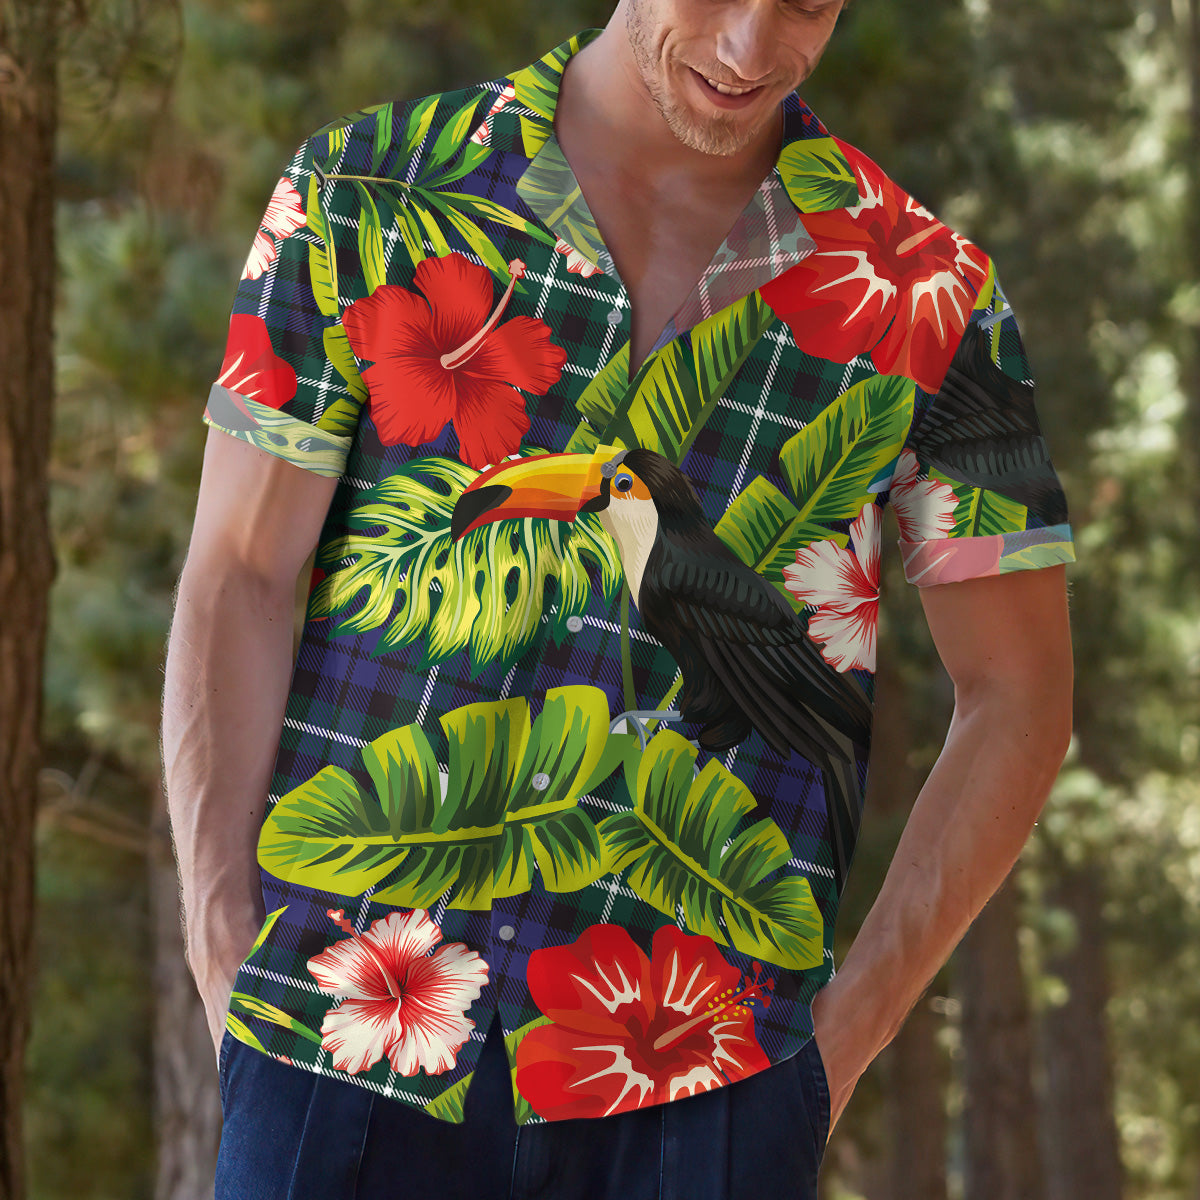 Scottish Tartan Allardice Clan Hawaiian Shirt Hibiscus - Tropical Garden Style